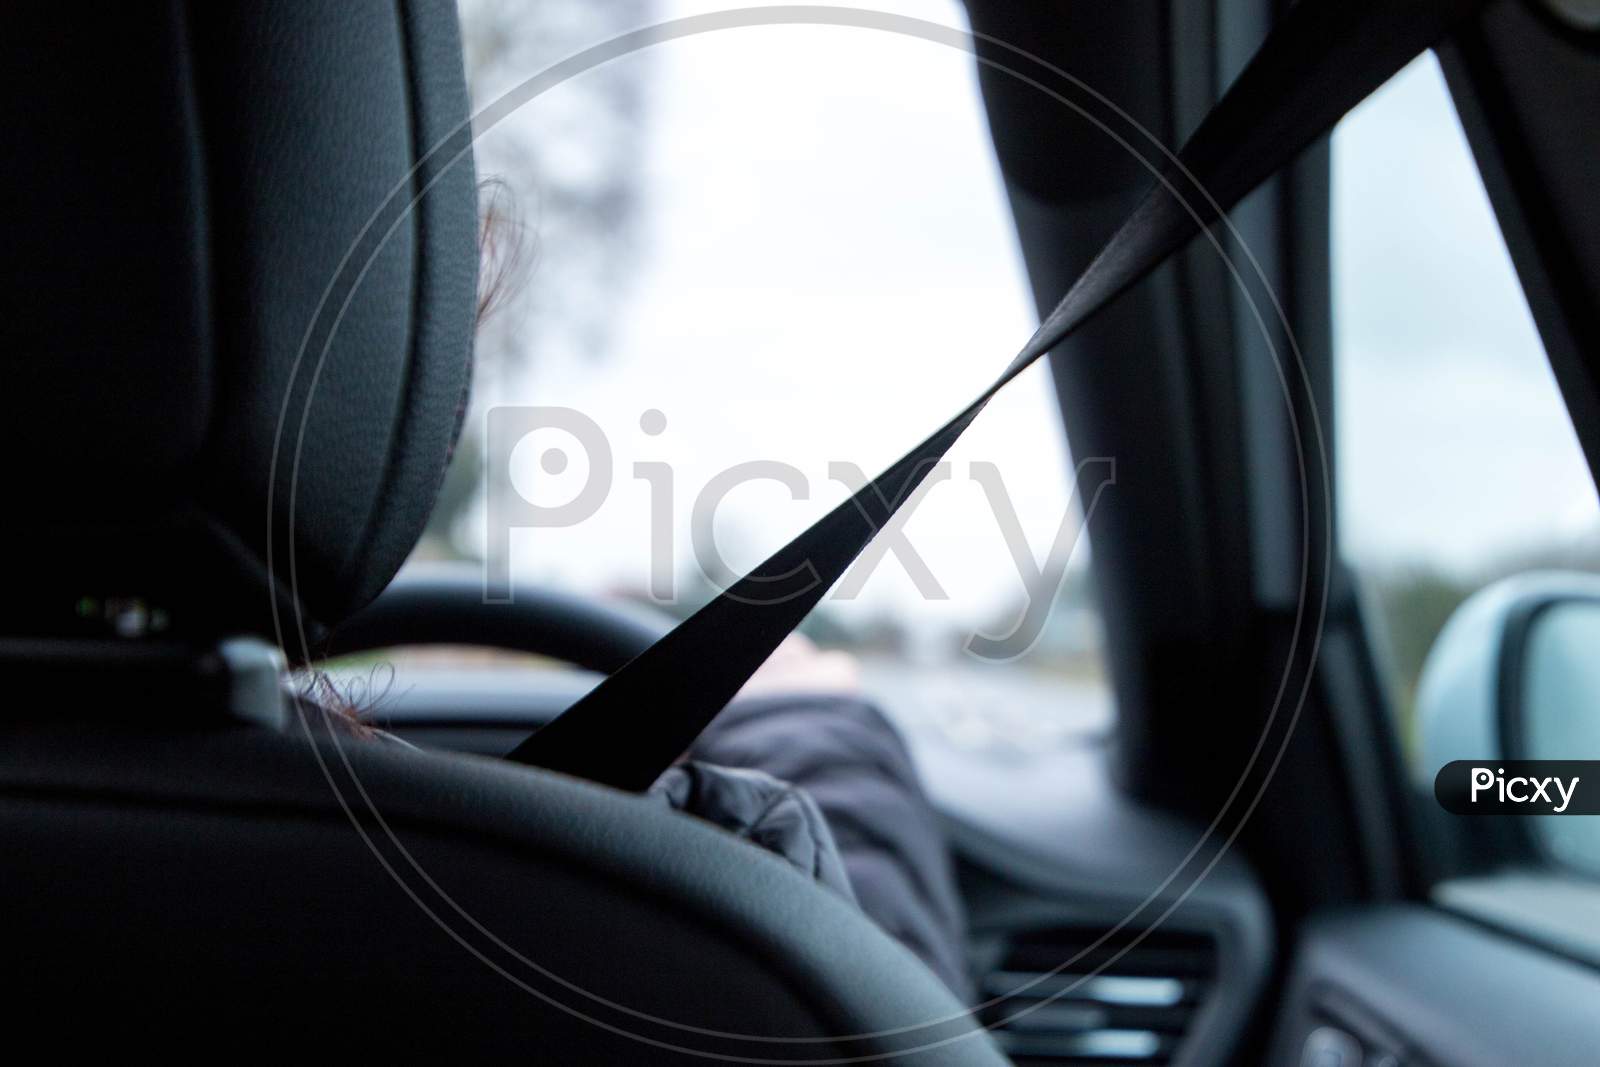 Driver Seat Belt Safety